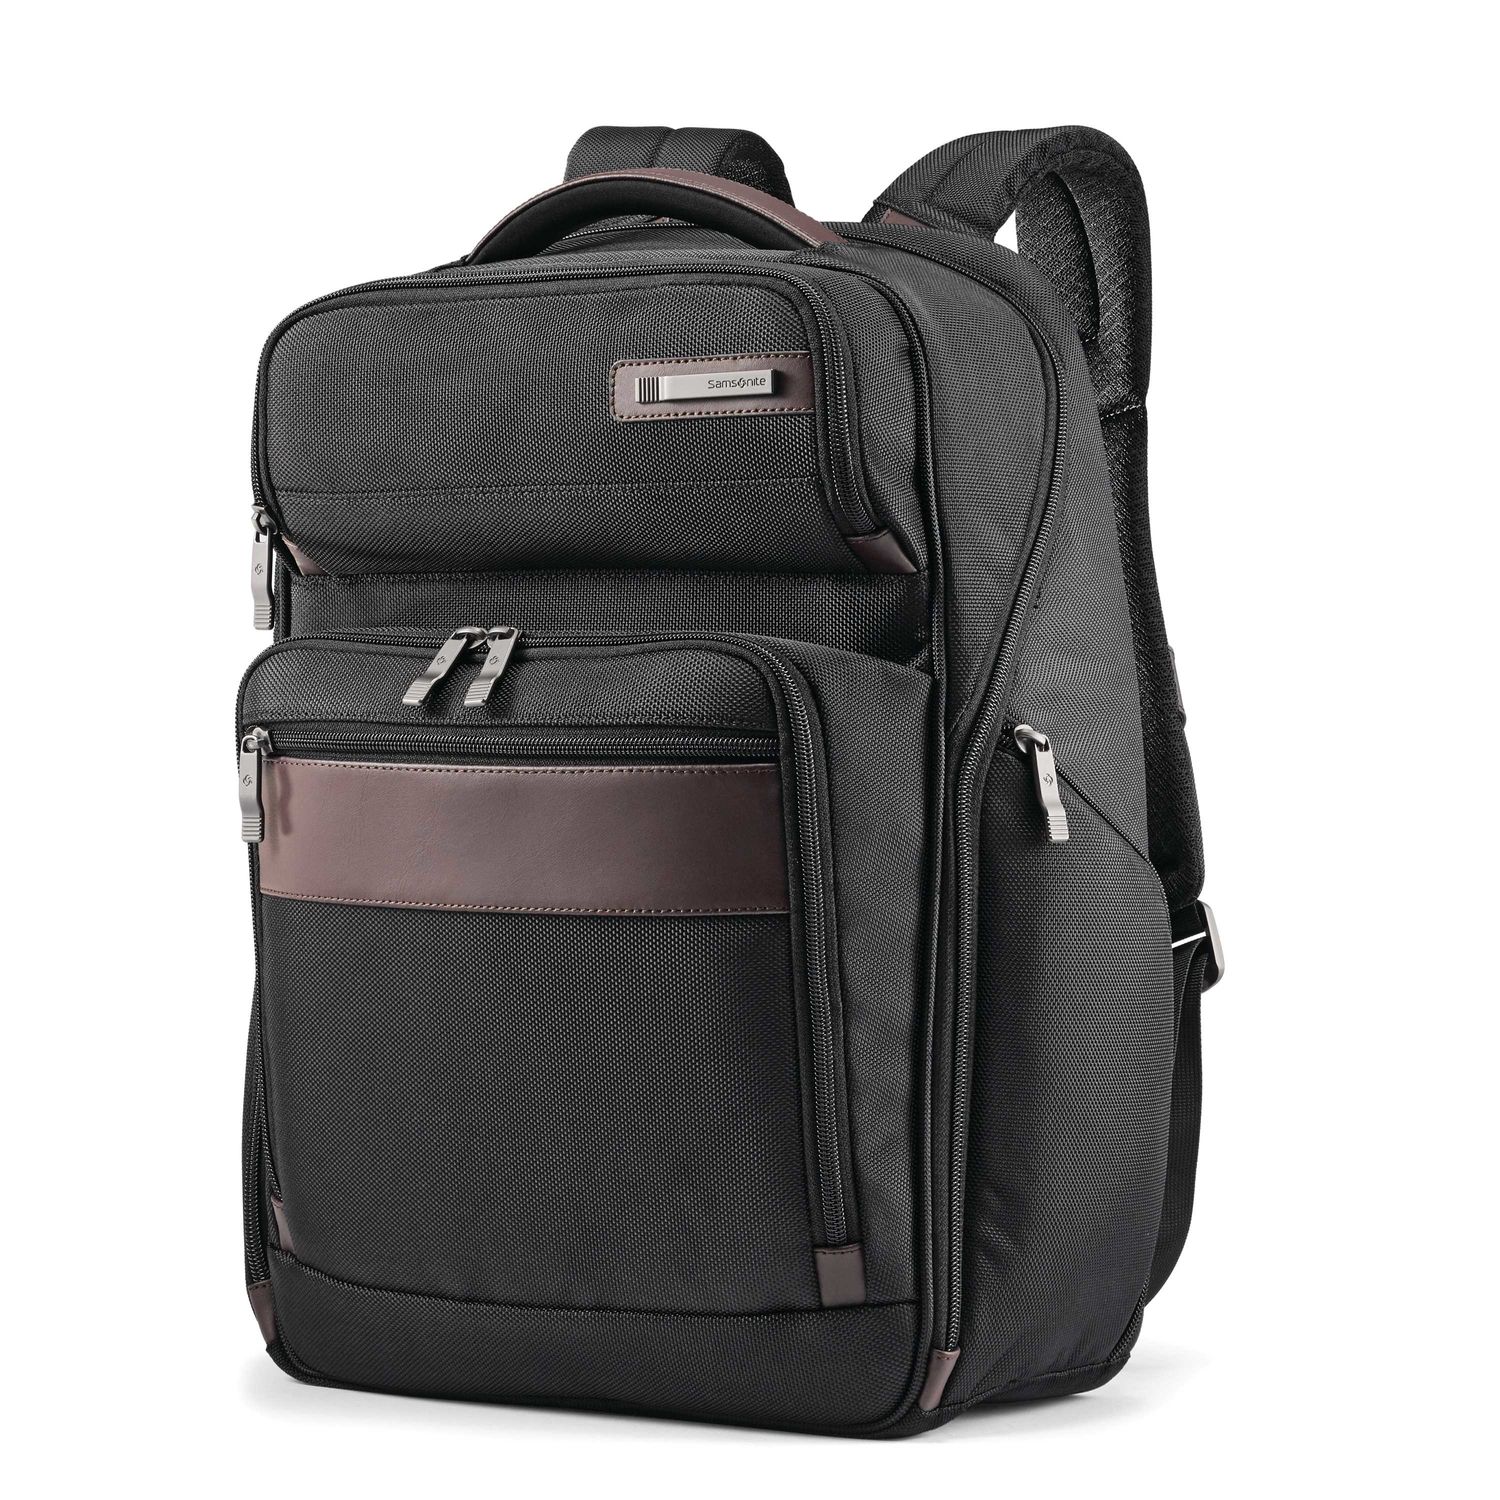 Samsonite Kombi Large Backpack - Black/Brown - Irv’s Luggage